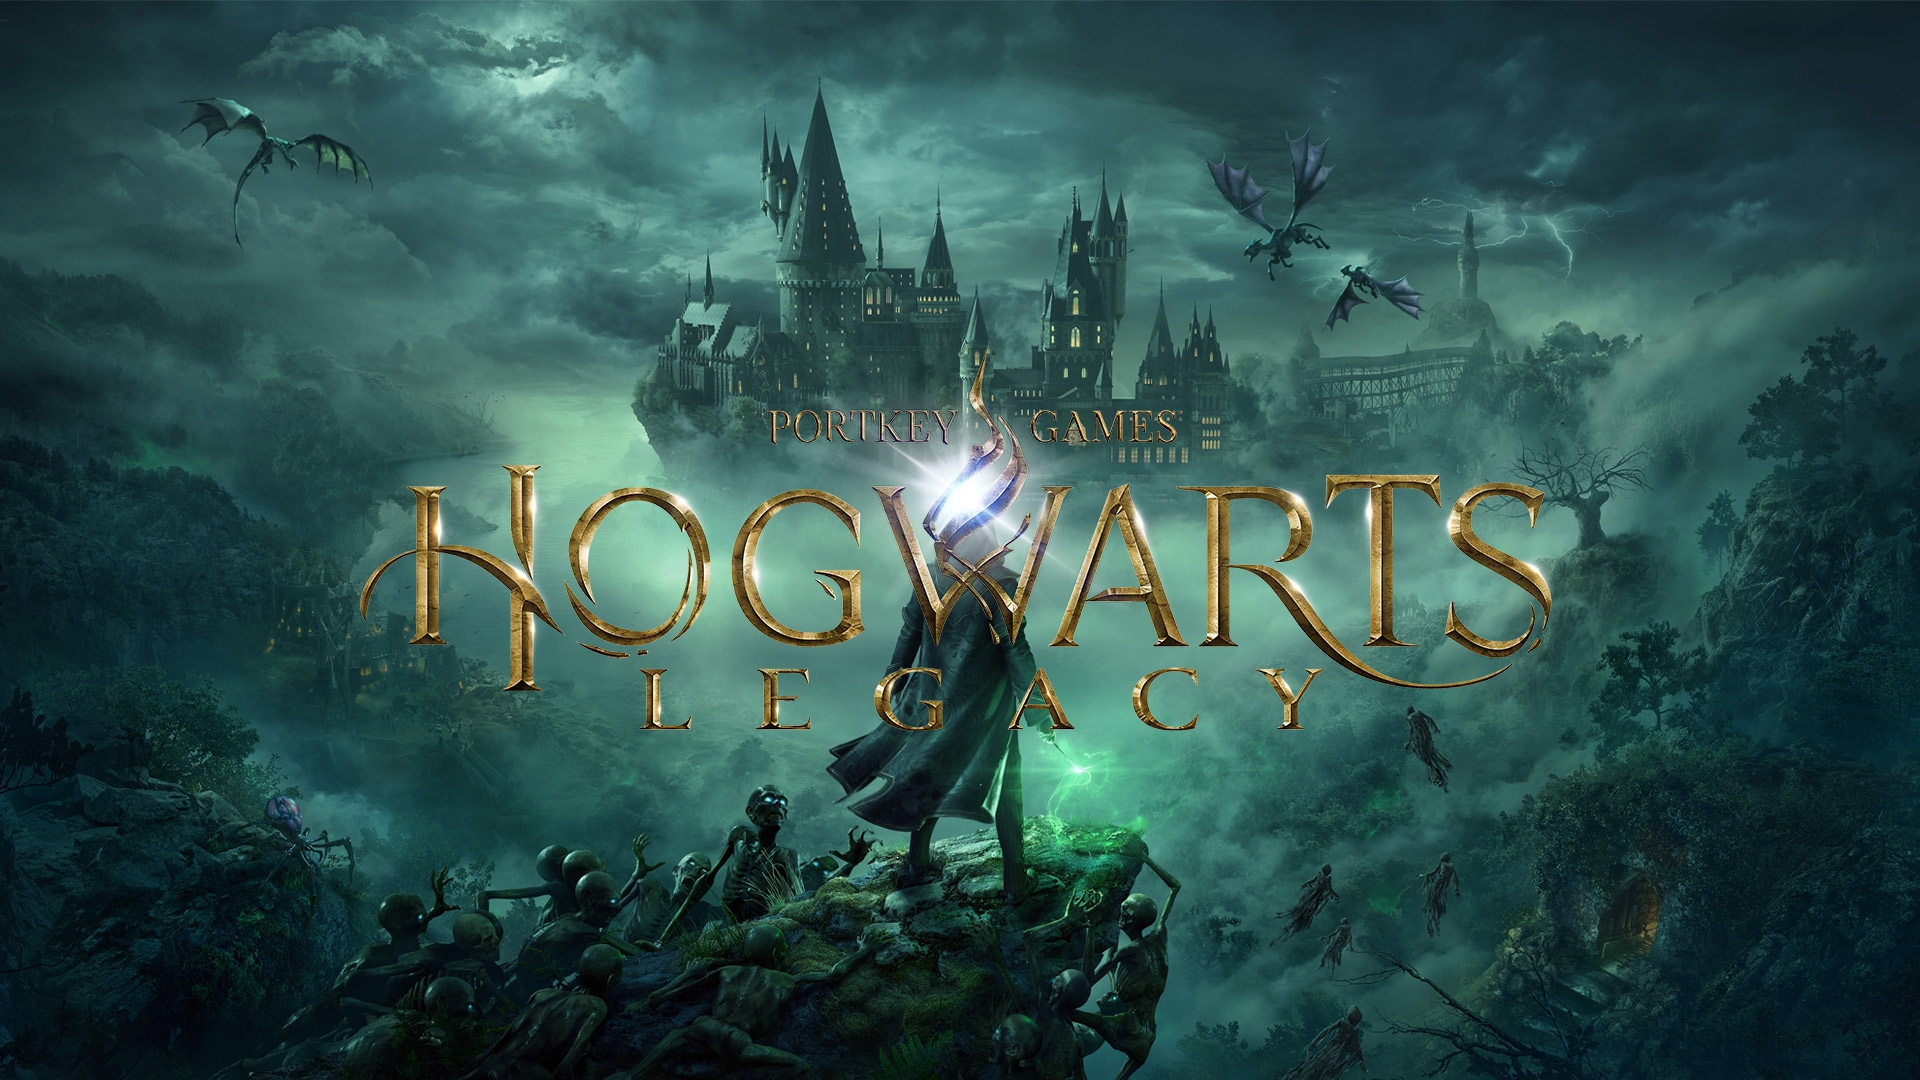 Hogwarts Legacy developer has begun development work for its next game.